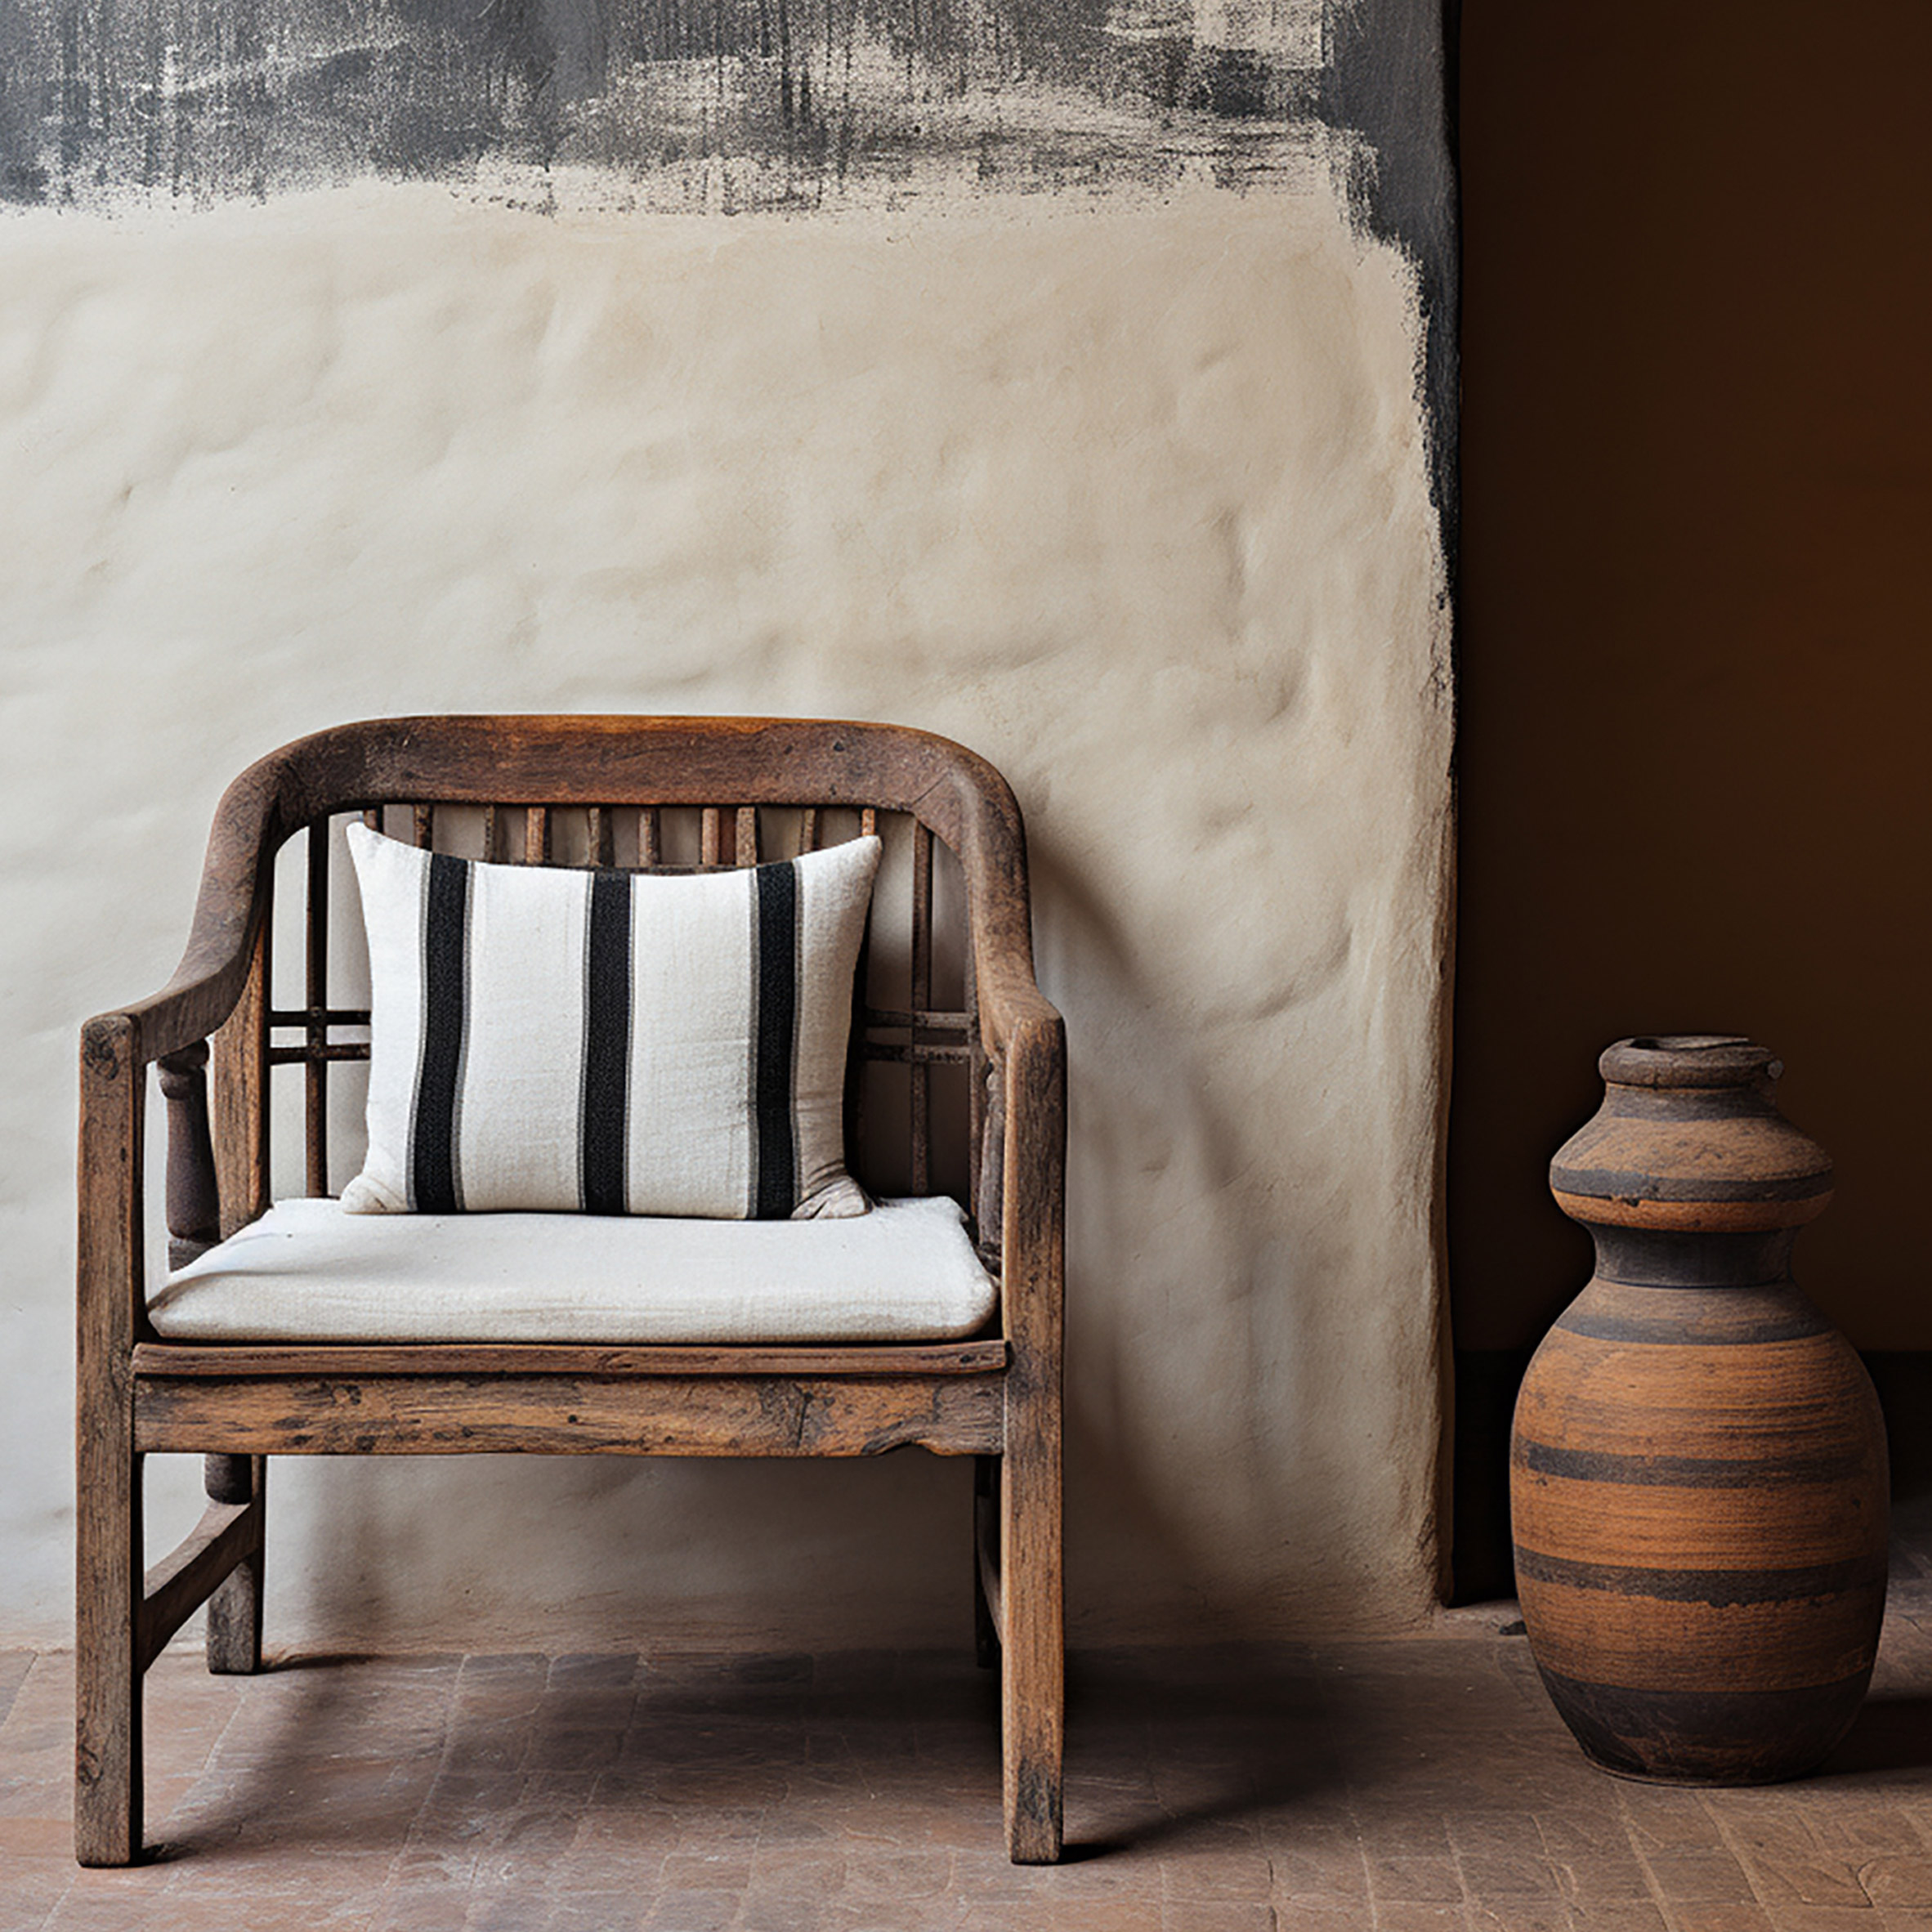 Chair against wall by Sonet studio